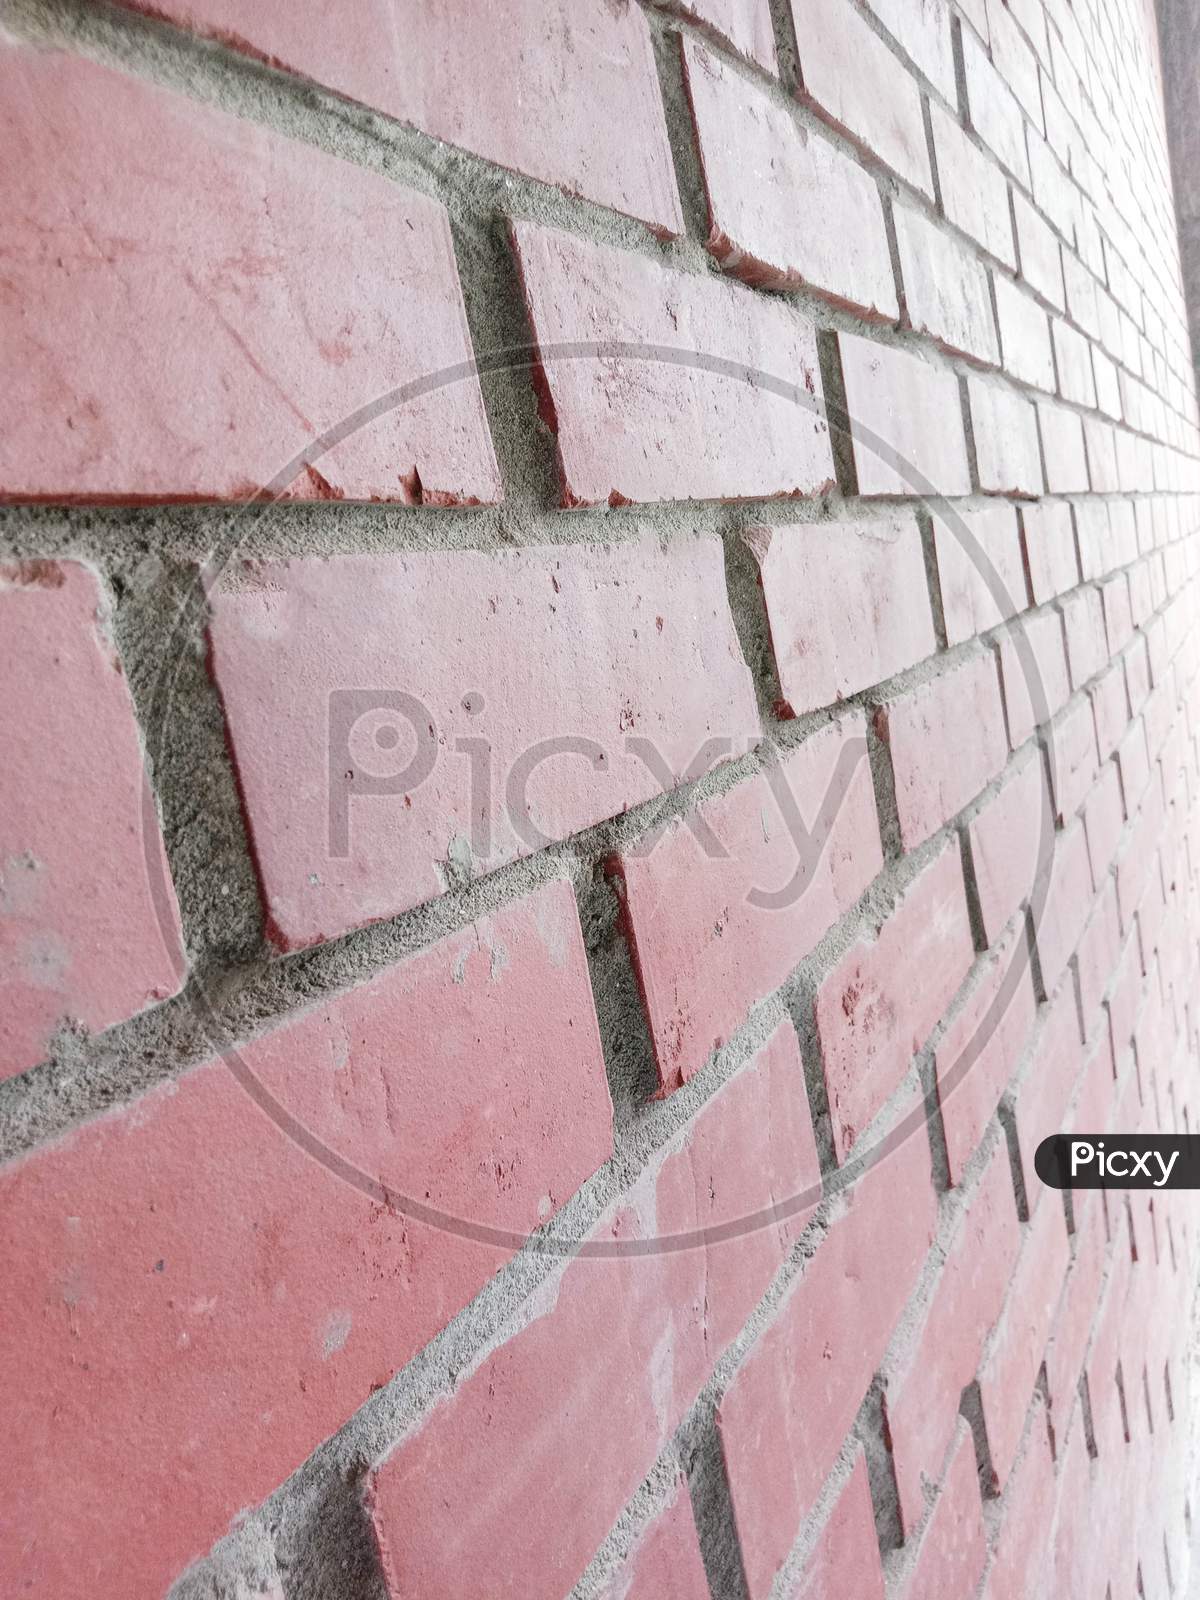 Red Colored Bricks Wall Closeup